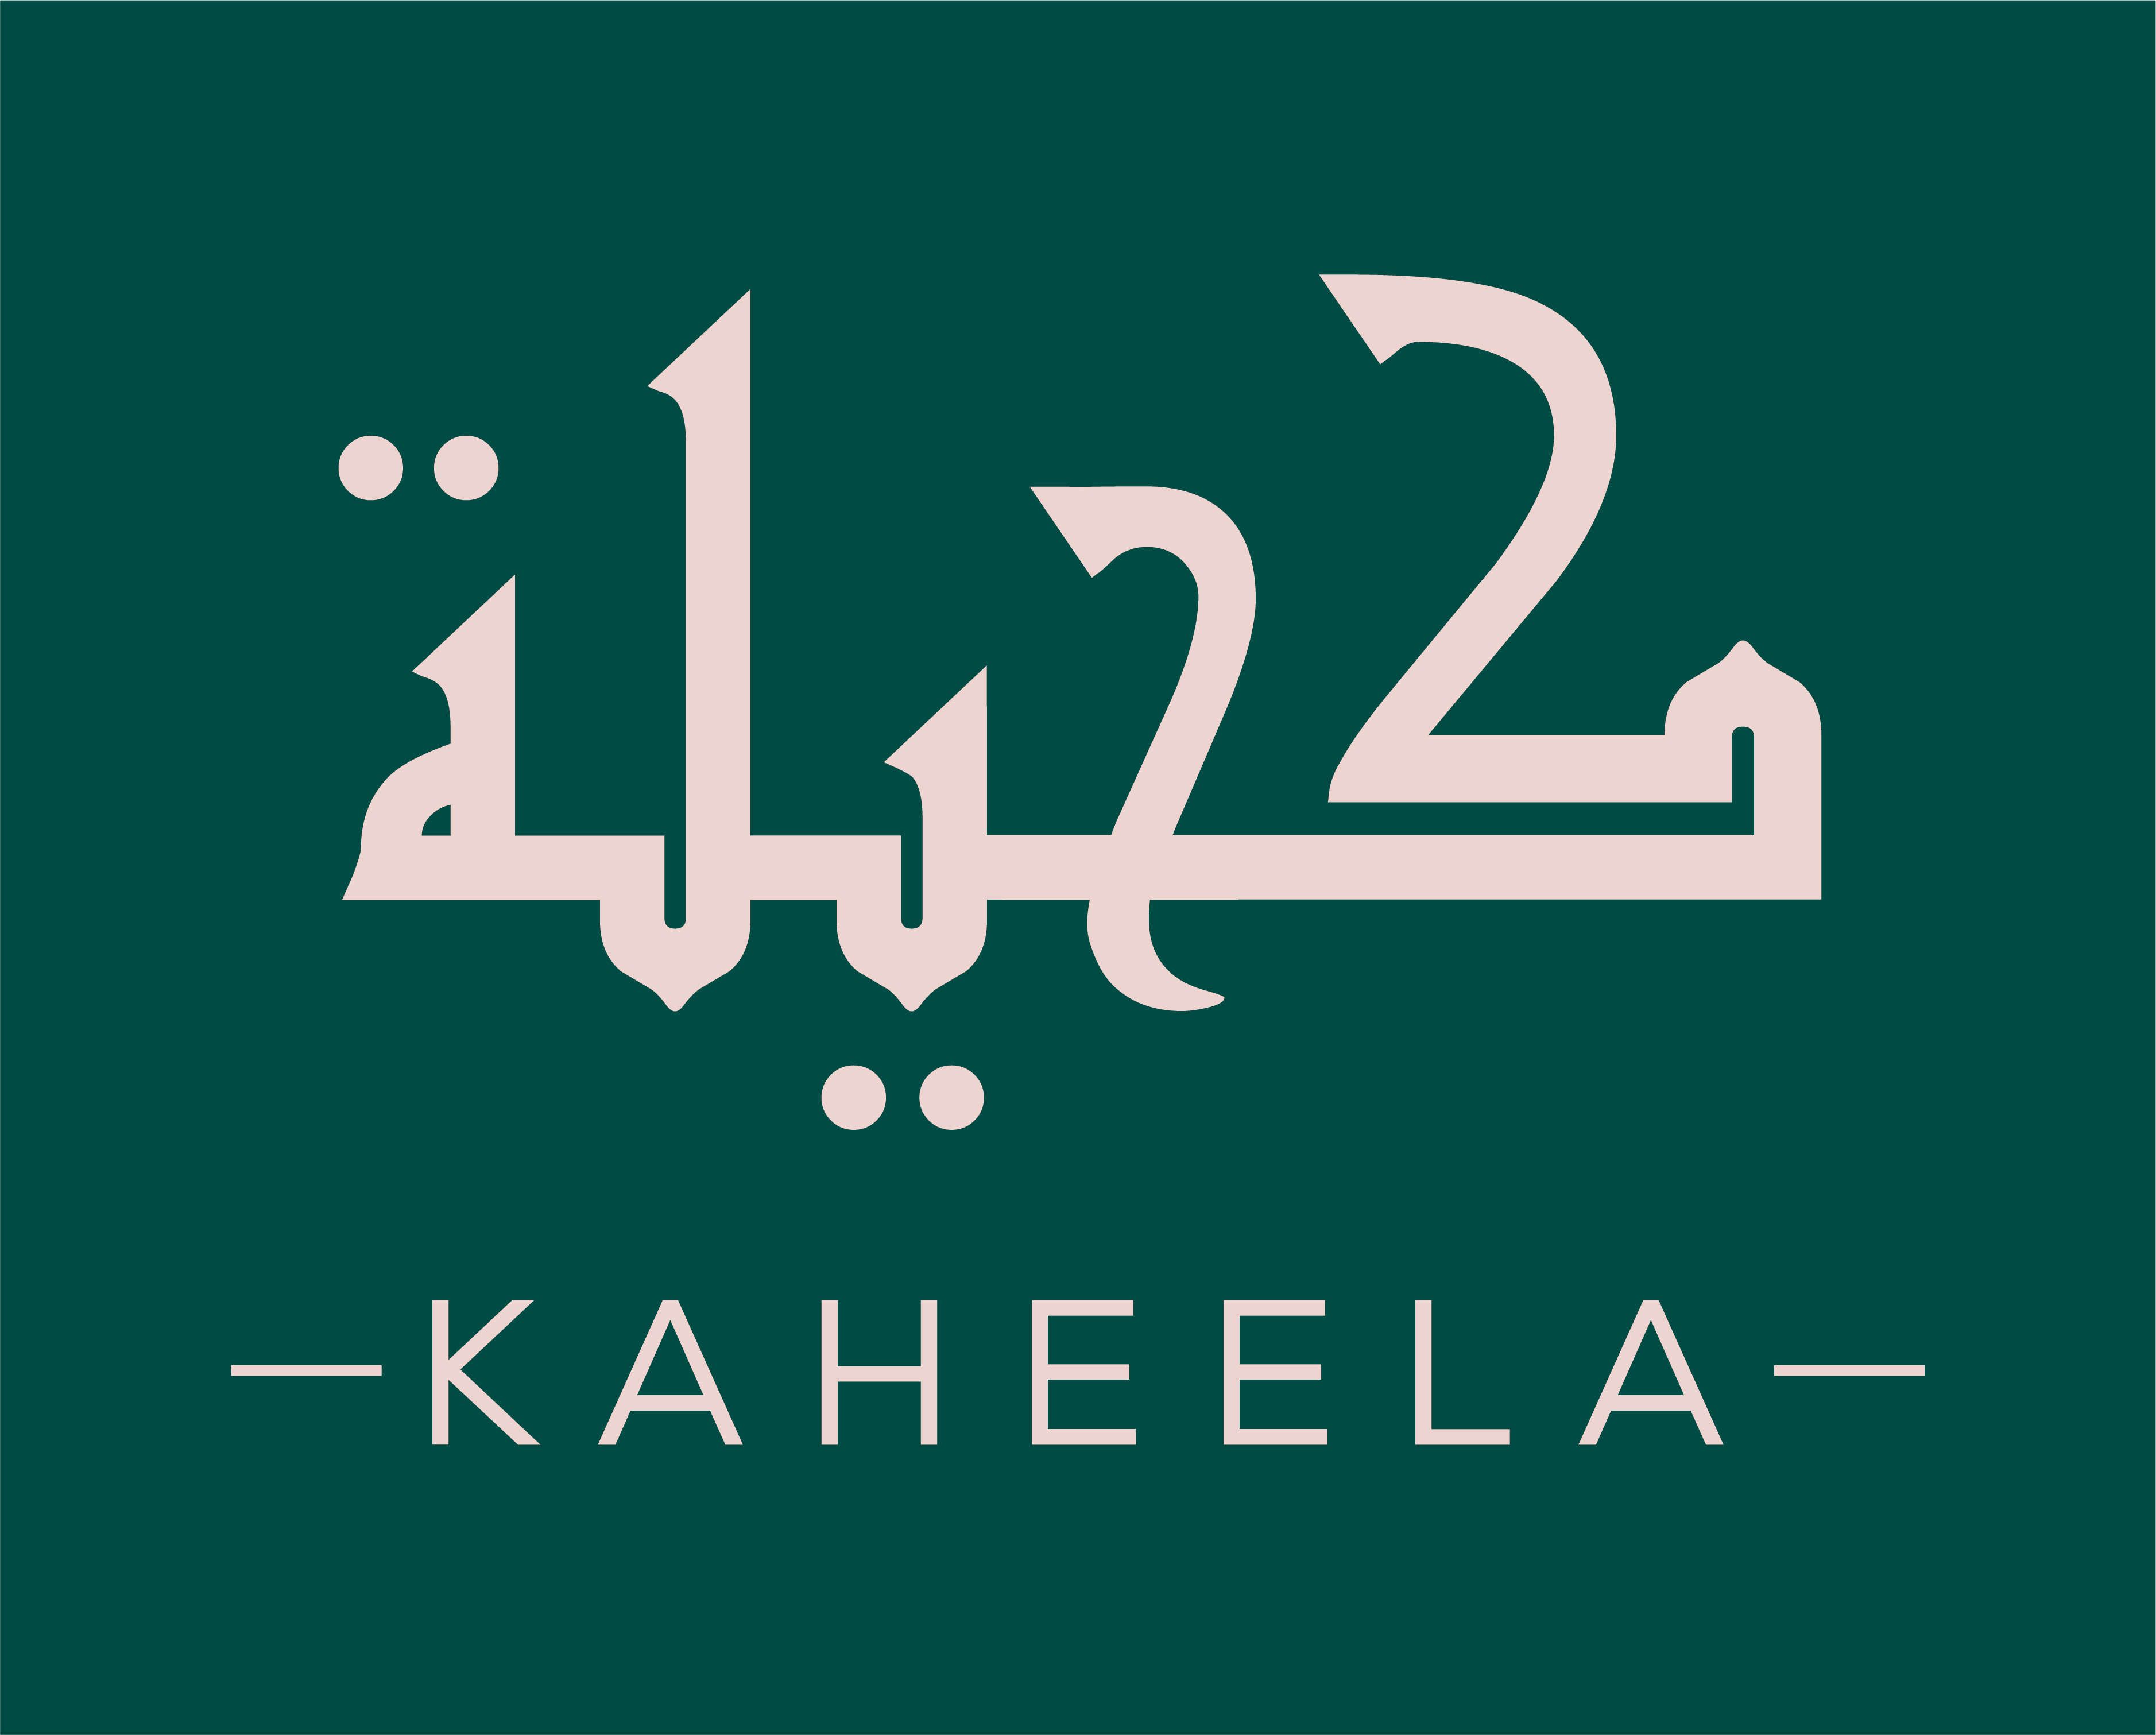 Kaheela